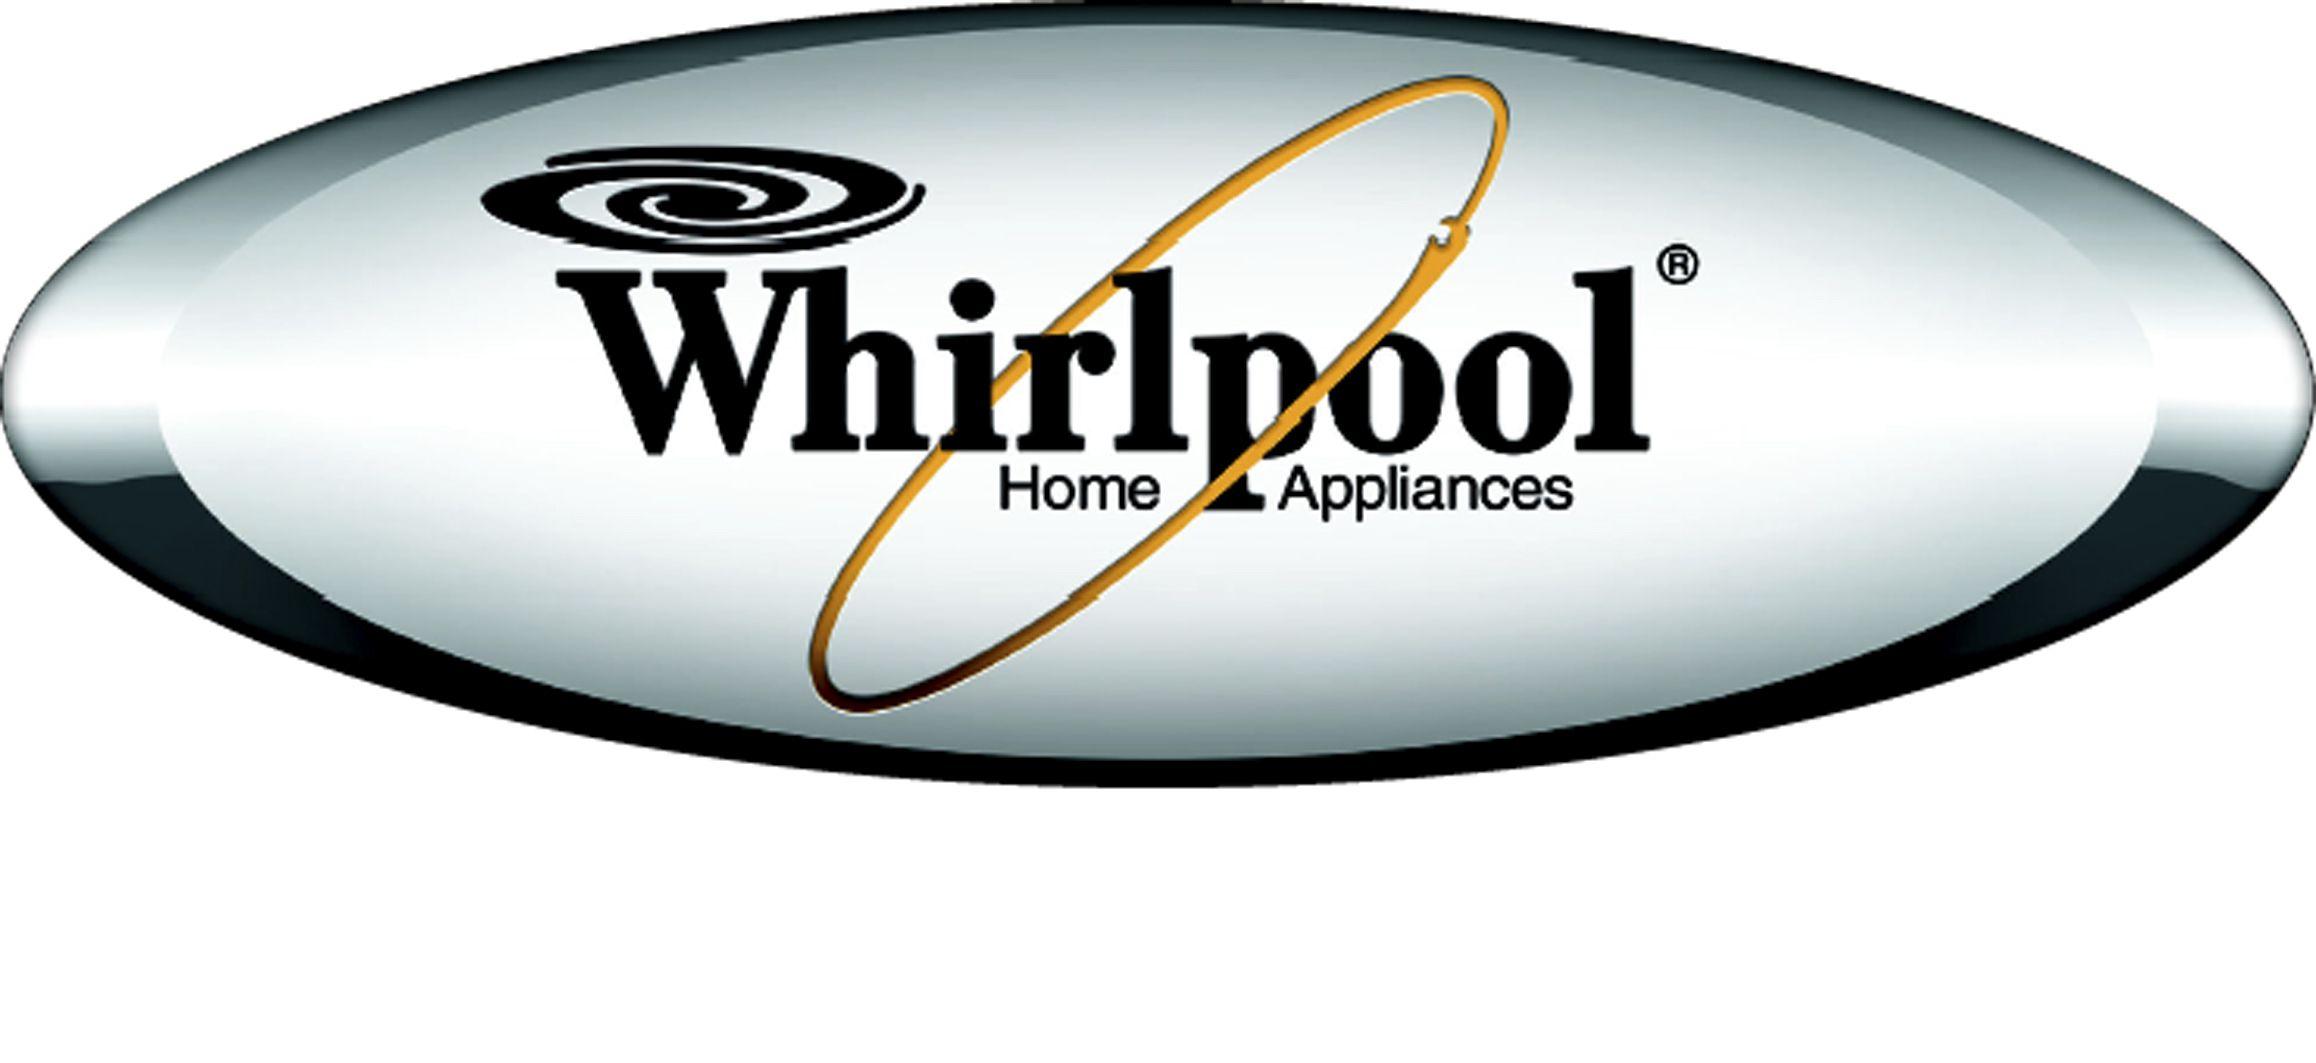 Whirlpool Appliances Logo - Whirlpool Home Appliances Service in Jadavpur, Kolkata-700045 ...